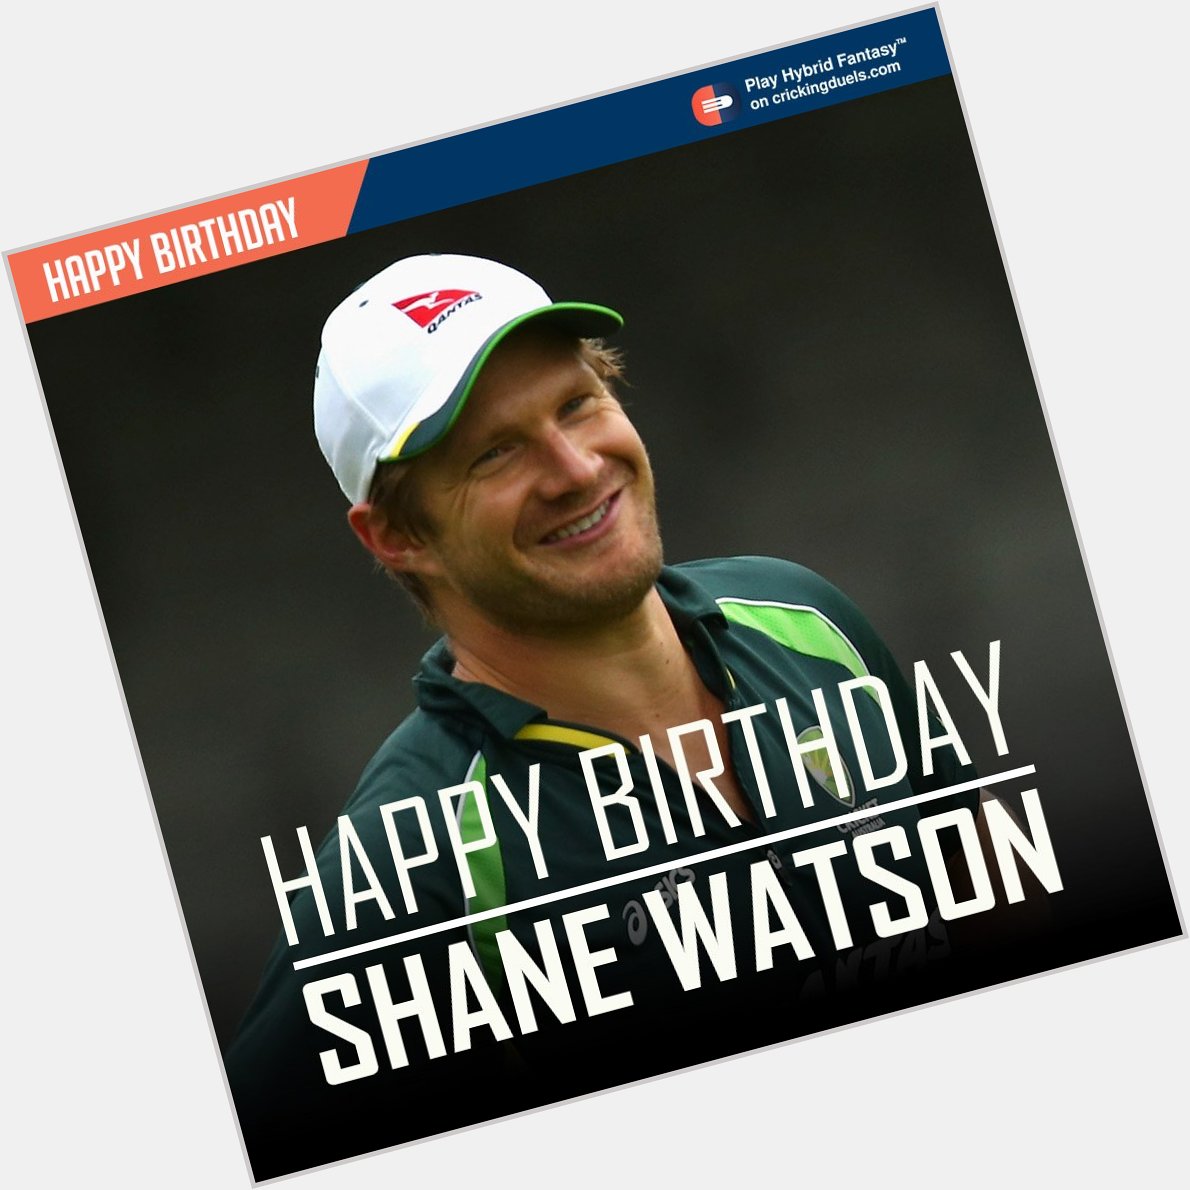 Happy Birthday Shane Watson. The former Australian cricketer turns 36 today. 